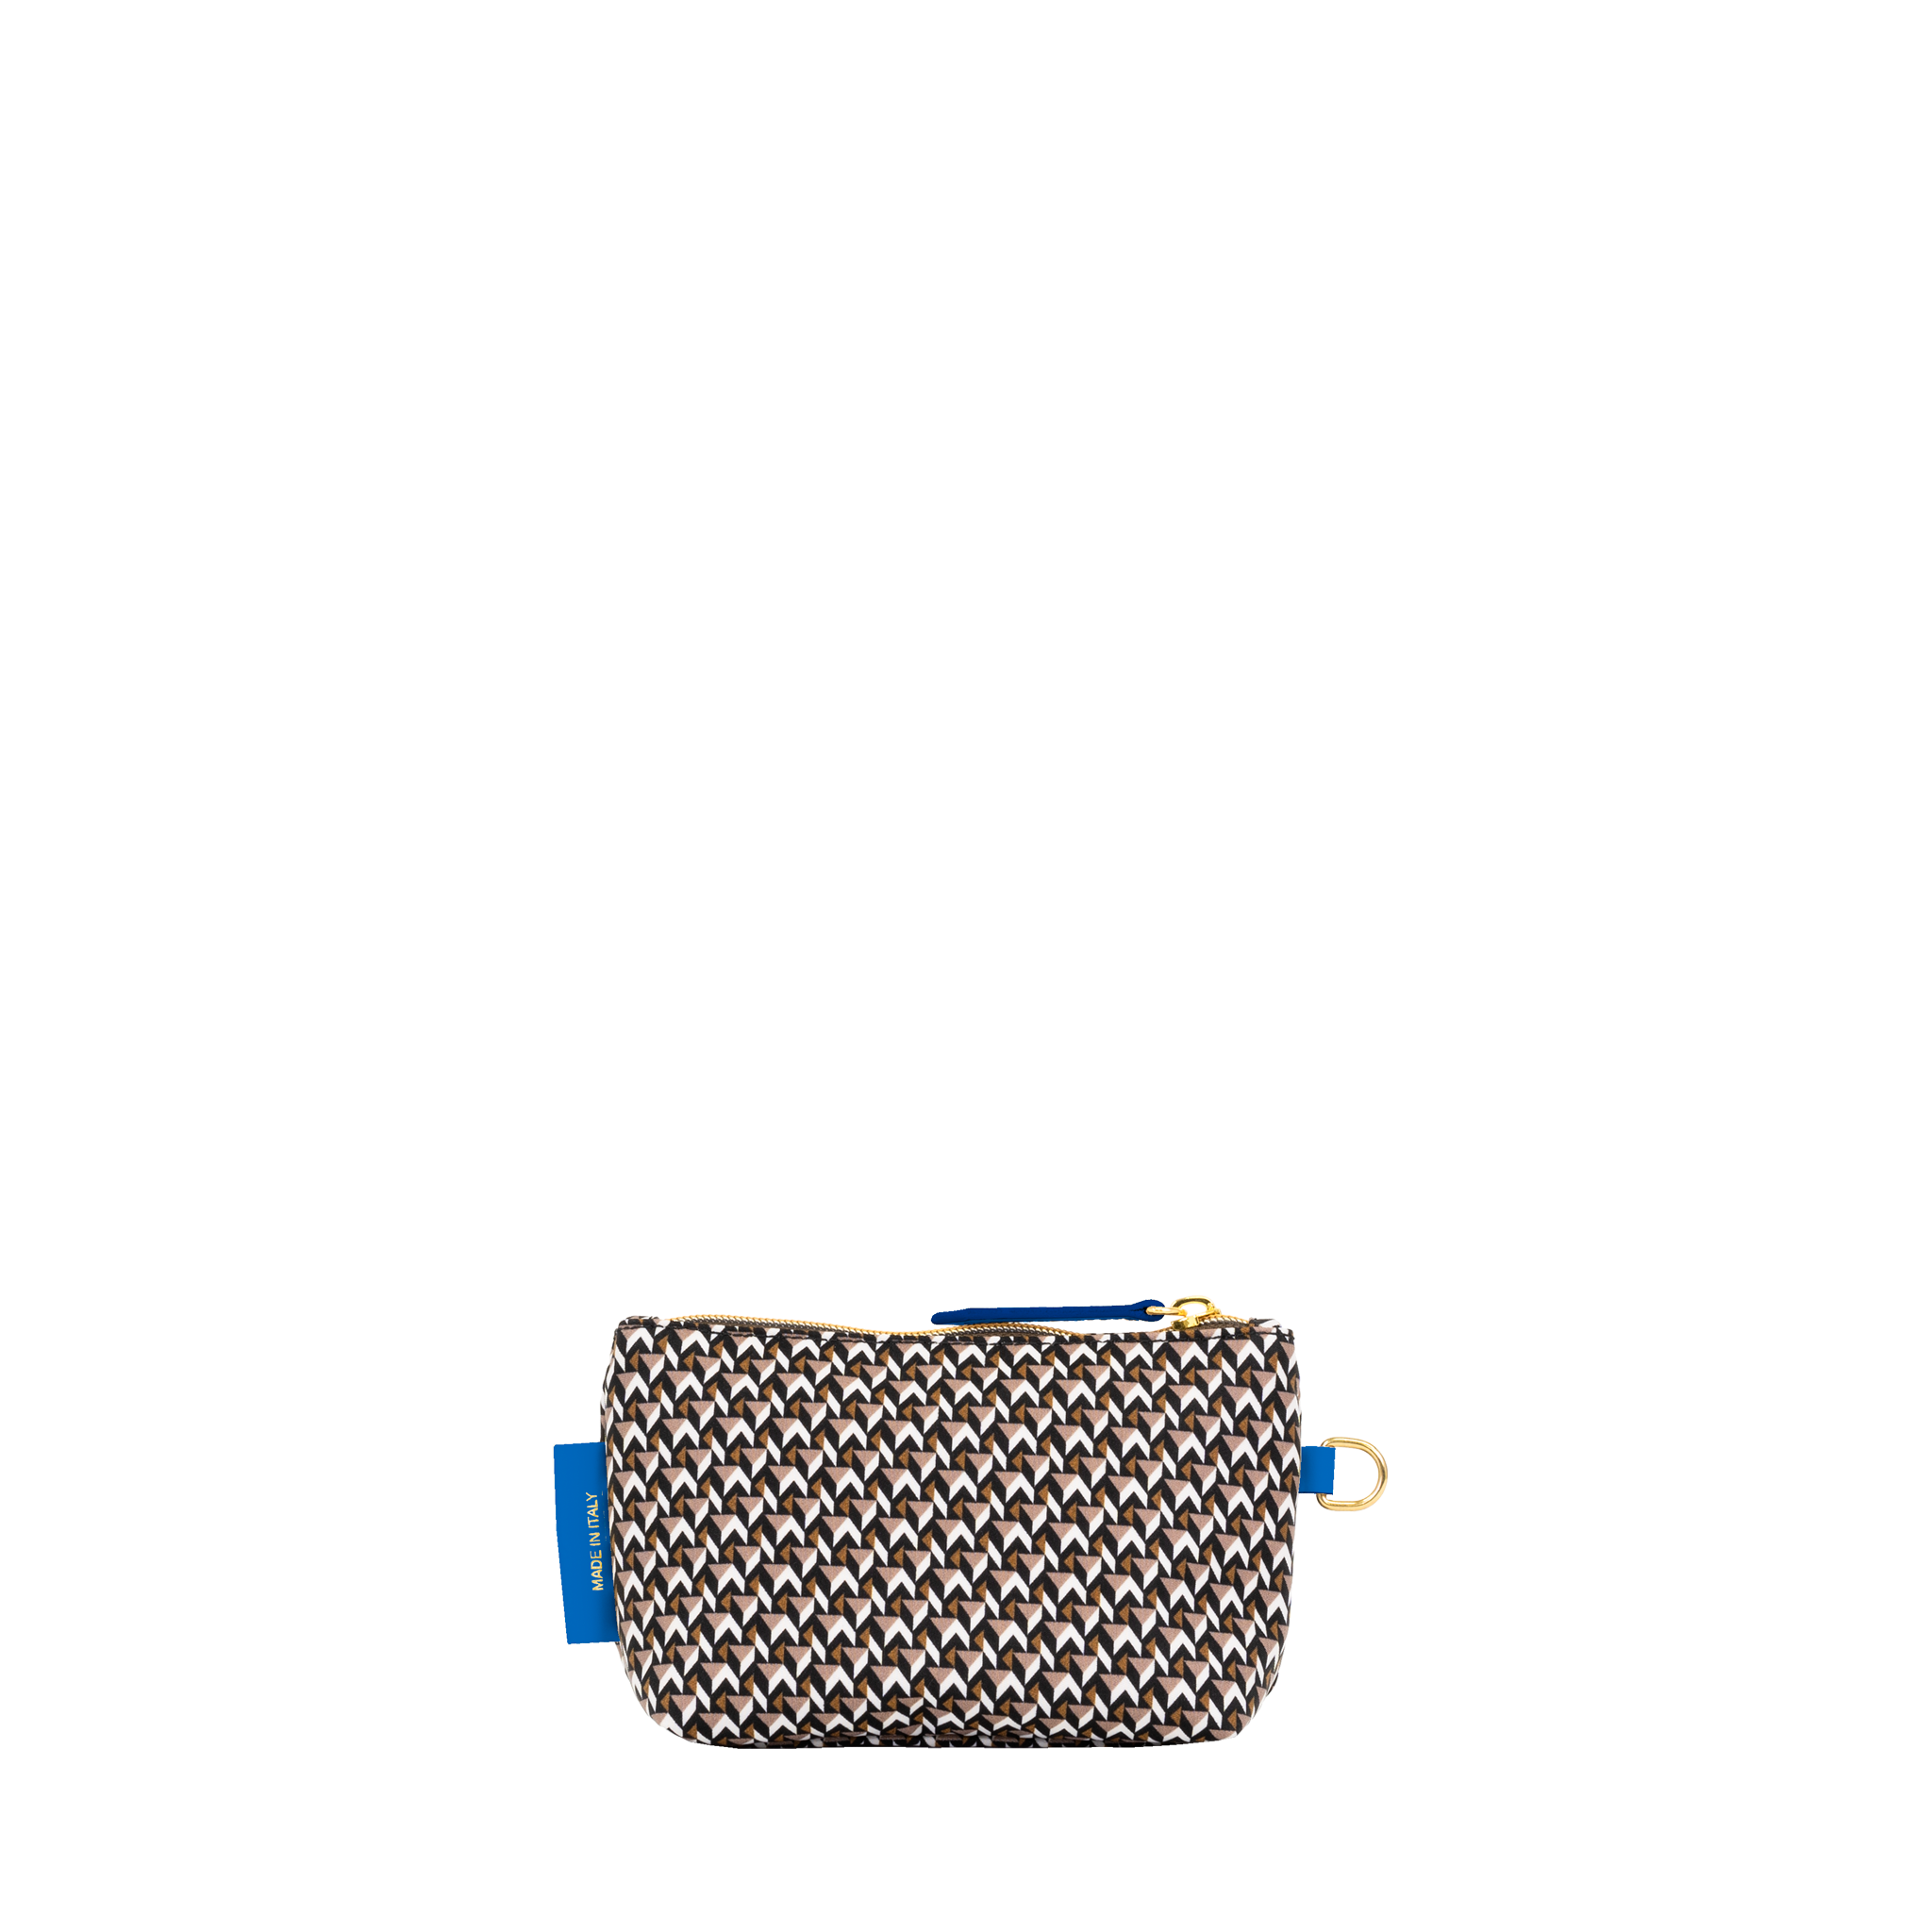 Roberta M - Italian Luxe Handbag – MADE by DWC